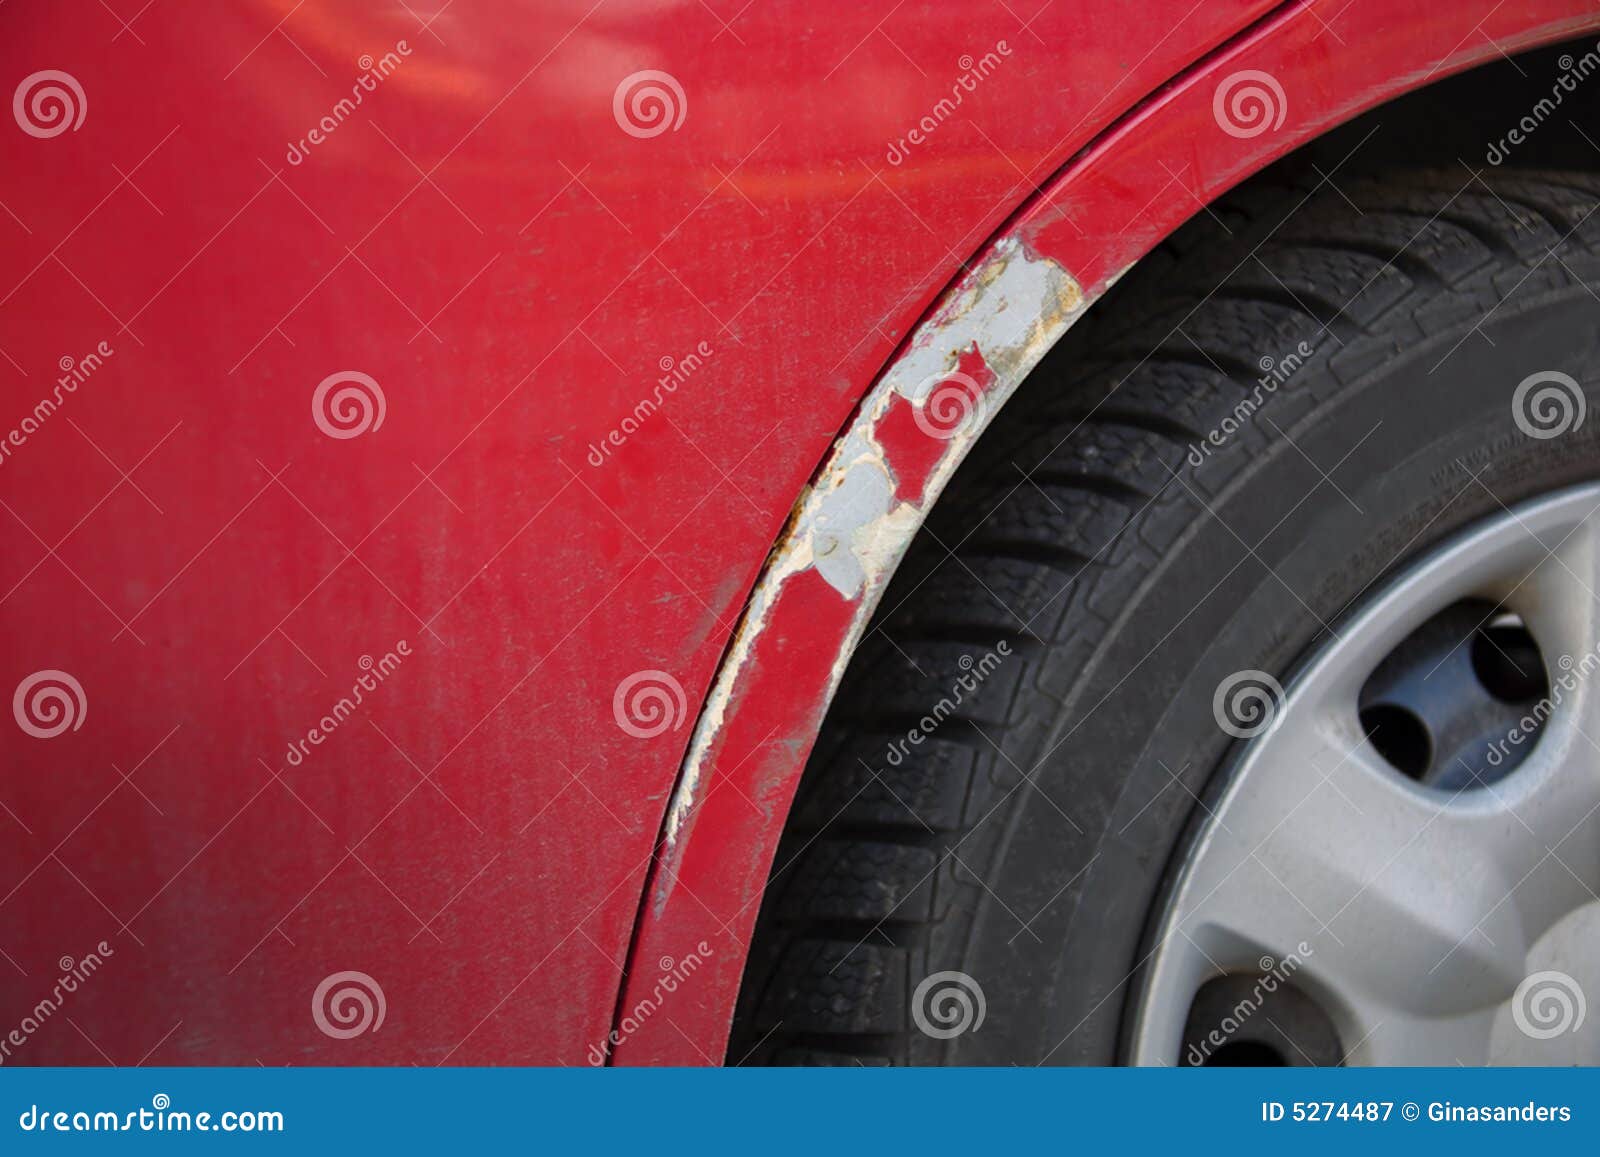 Почему вздулась краска на дисках Toyota Camry VII фото